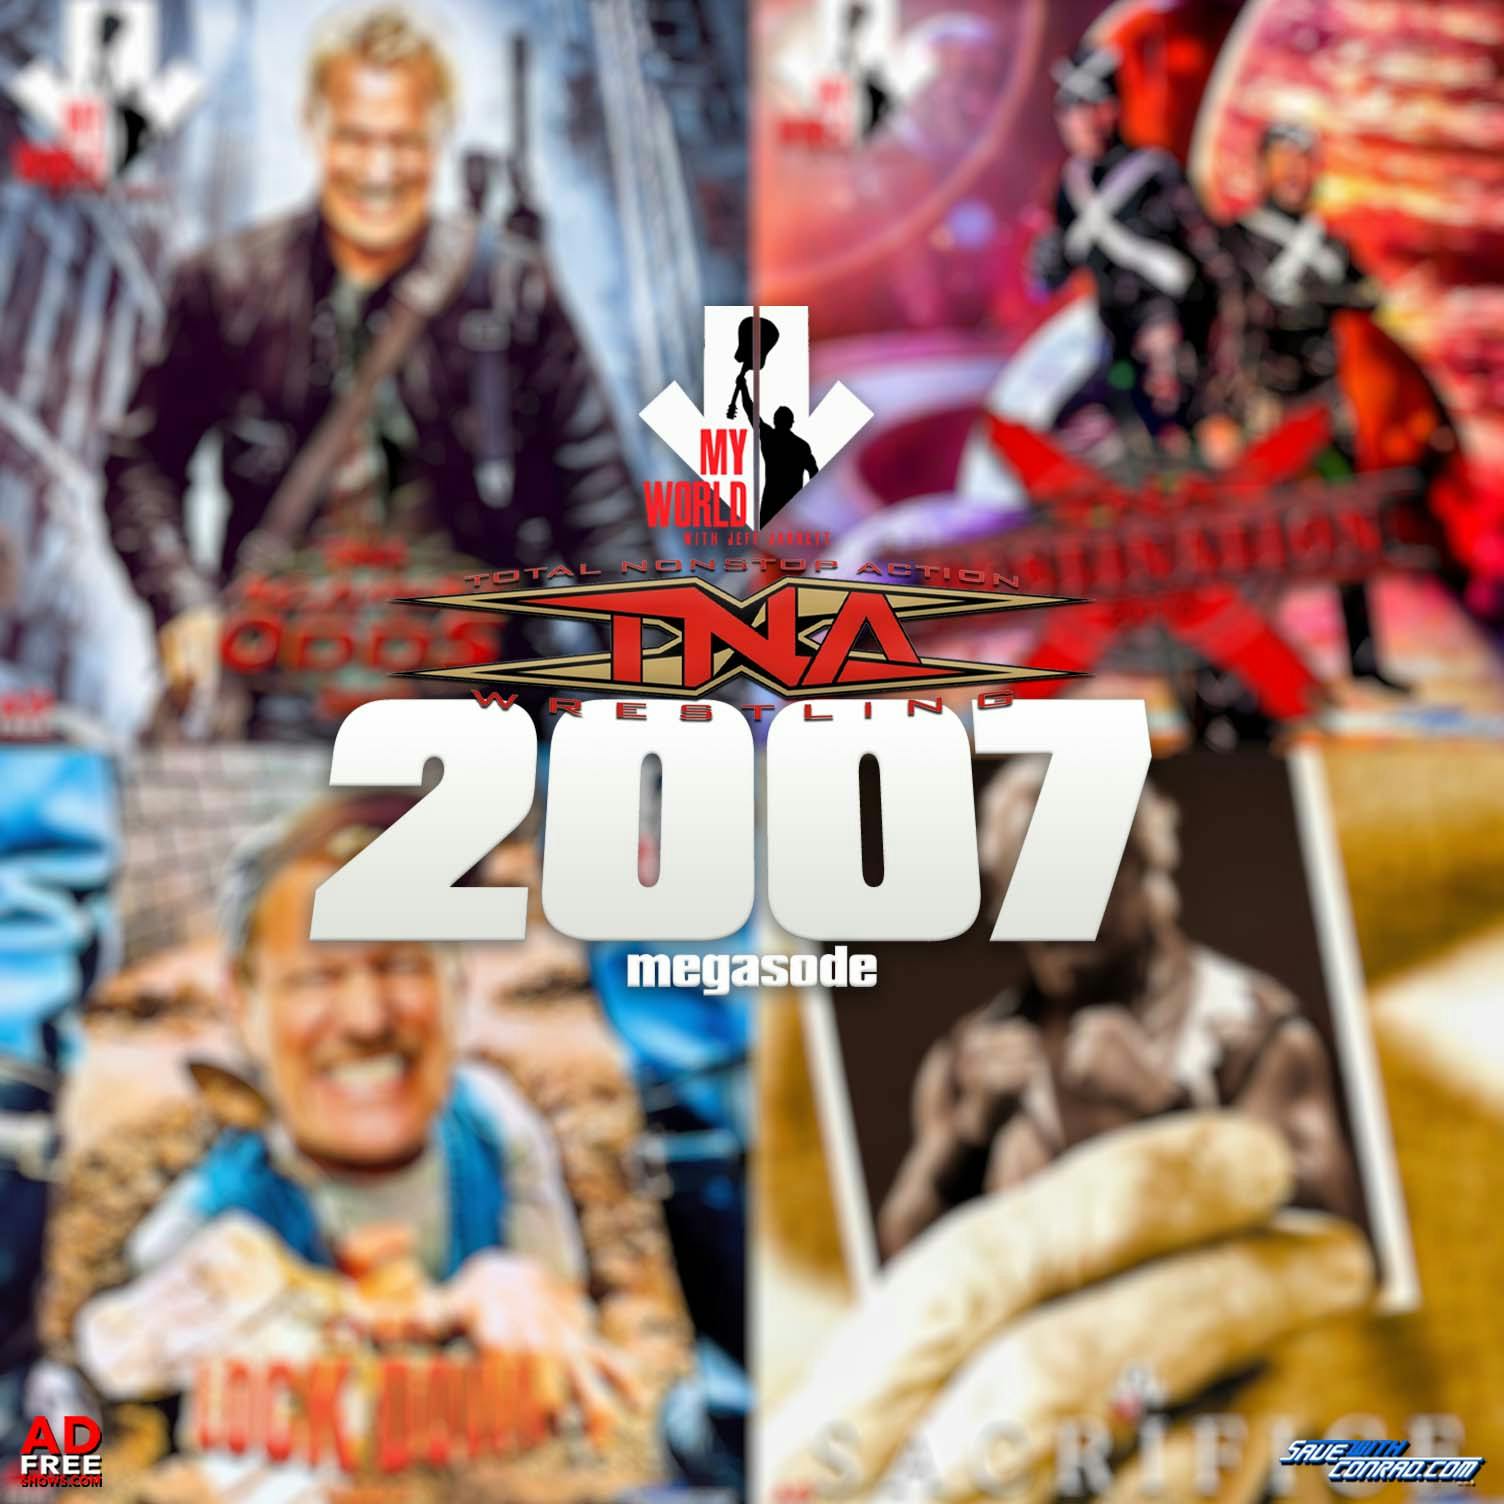 Episode 72: TNA 2007 MEGASODE